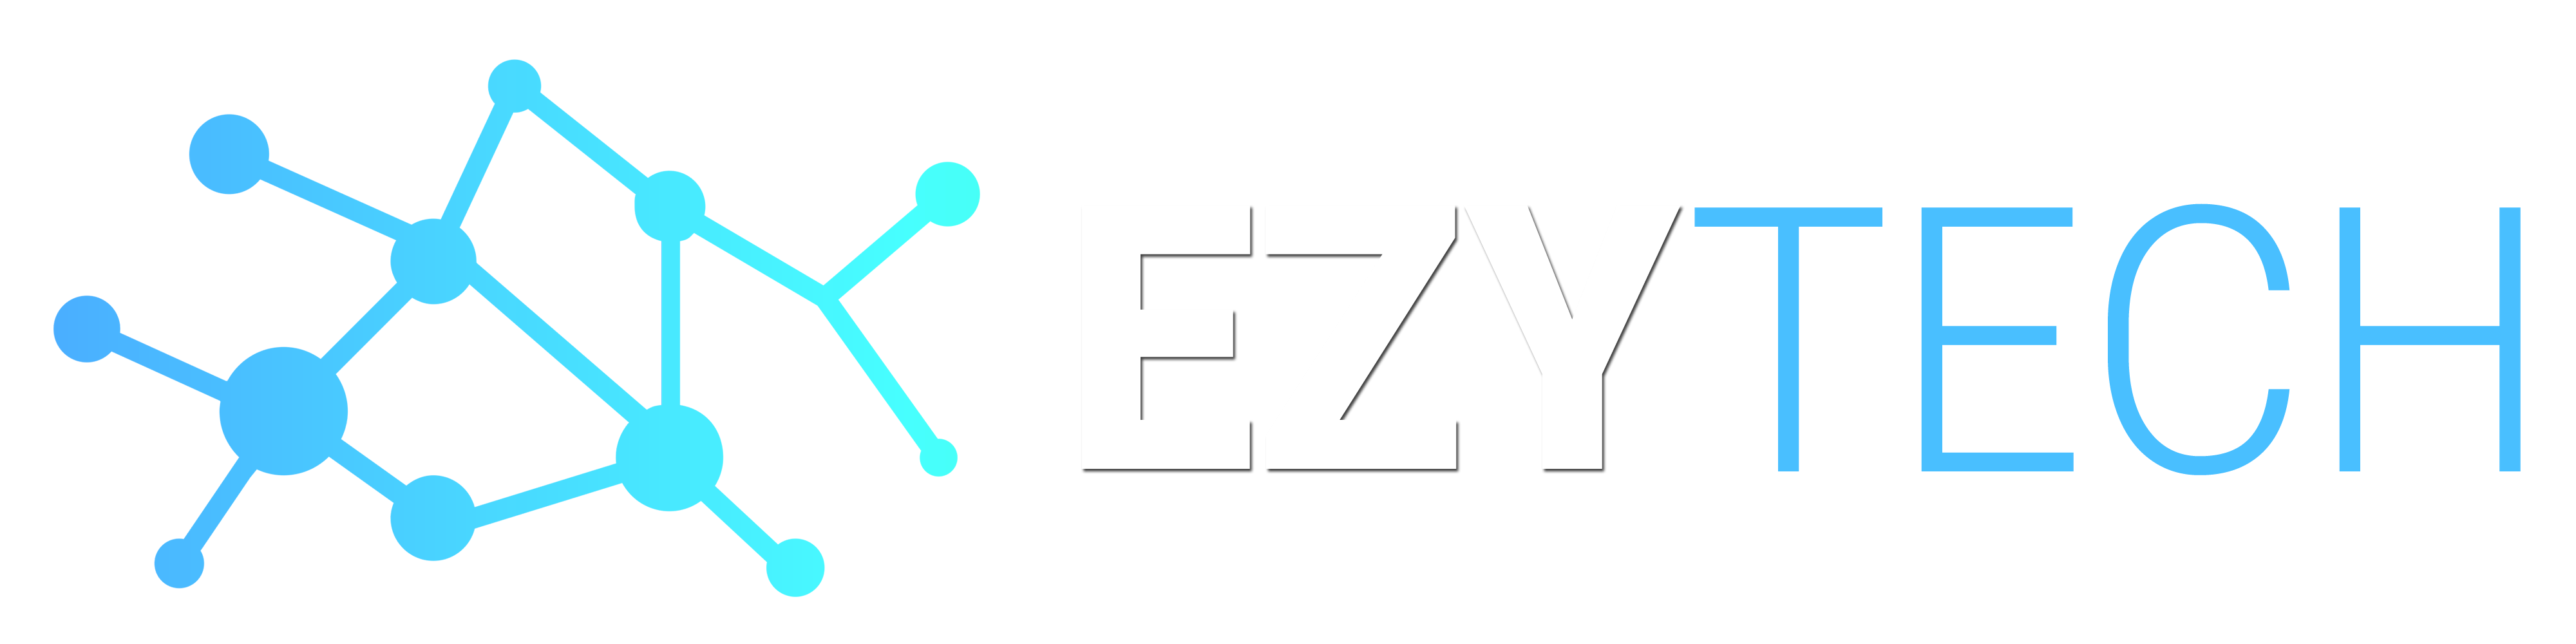 Ezy Tech Solutions Co Ltd